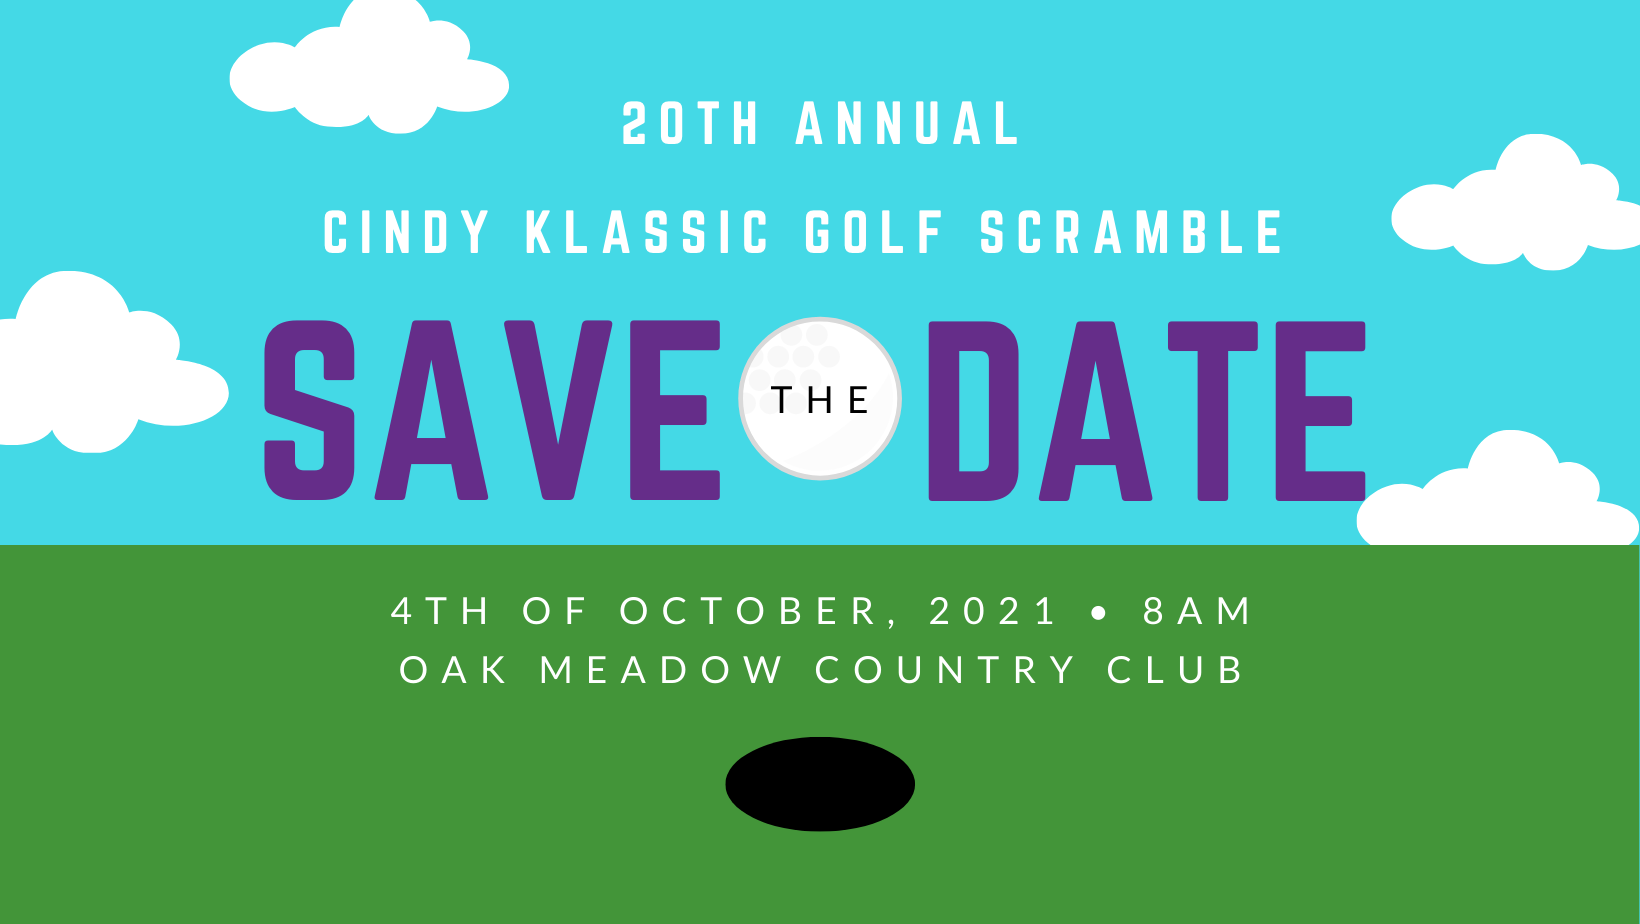 20th Annual Cindy Klassic Golf Scramble